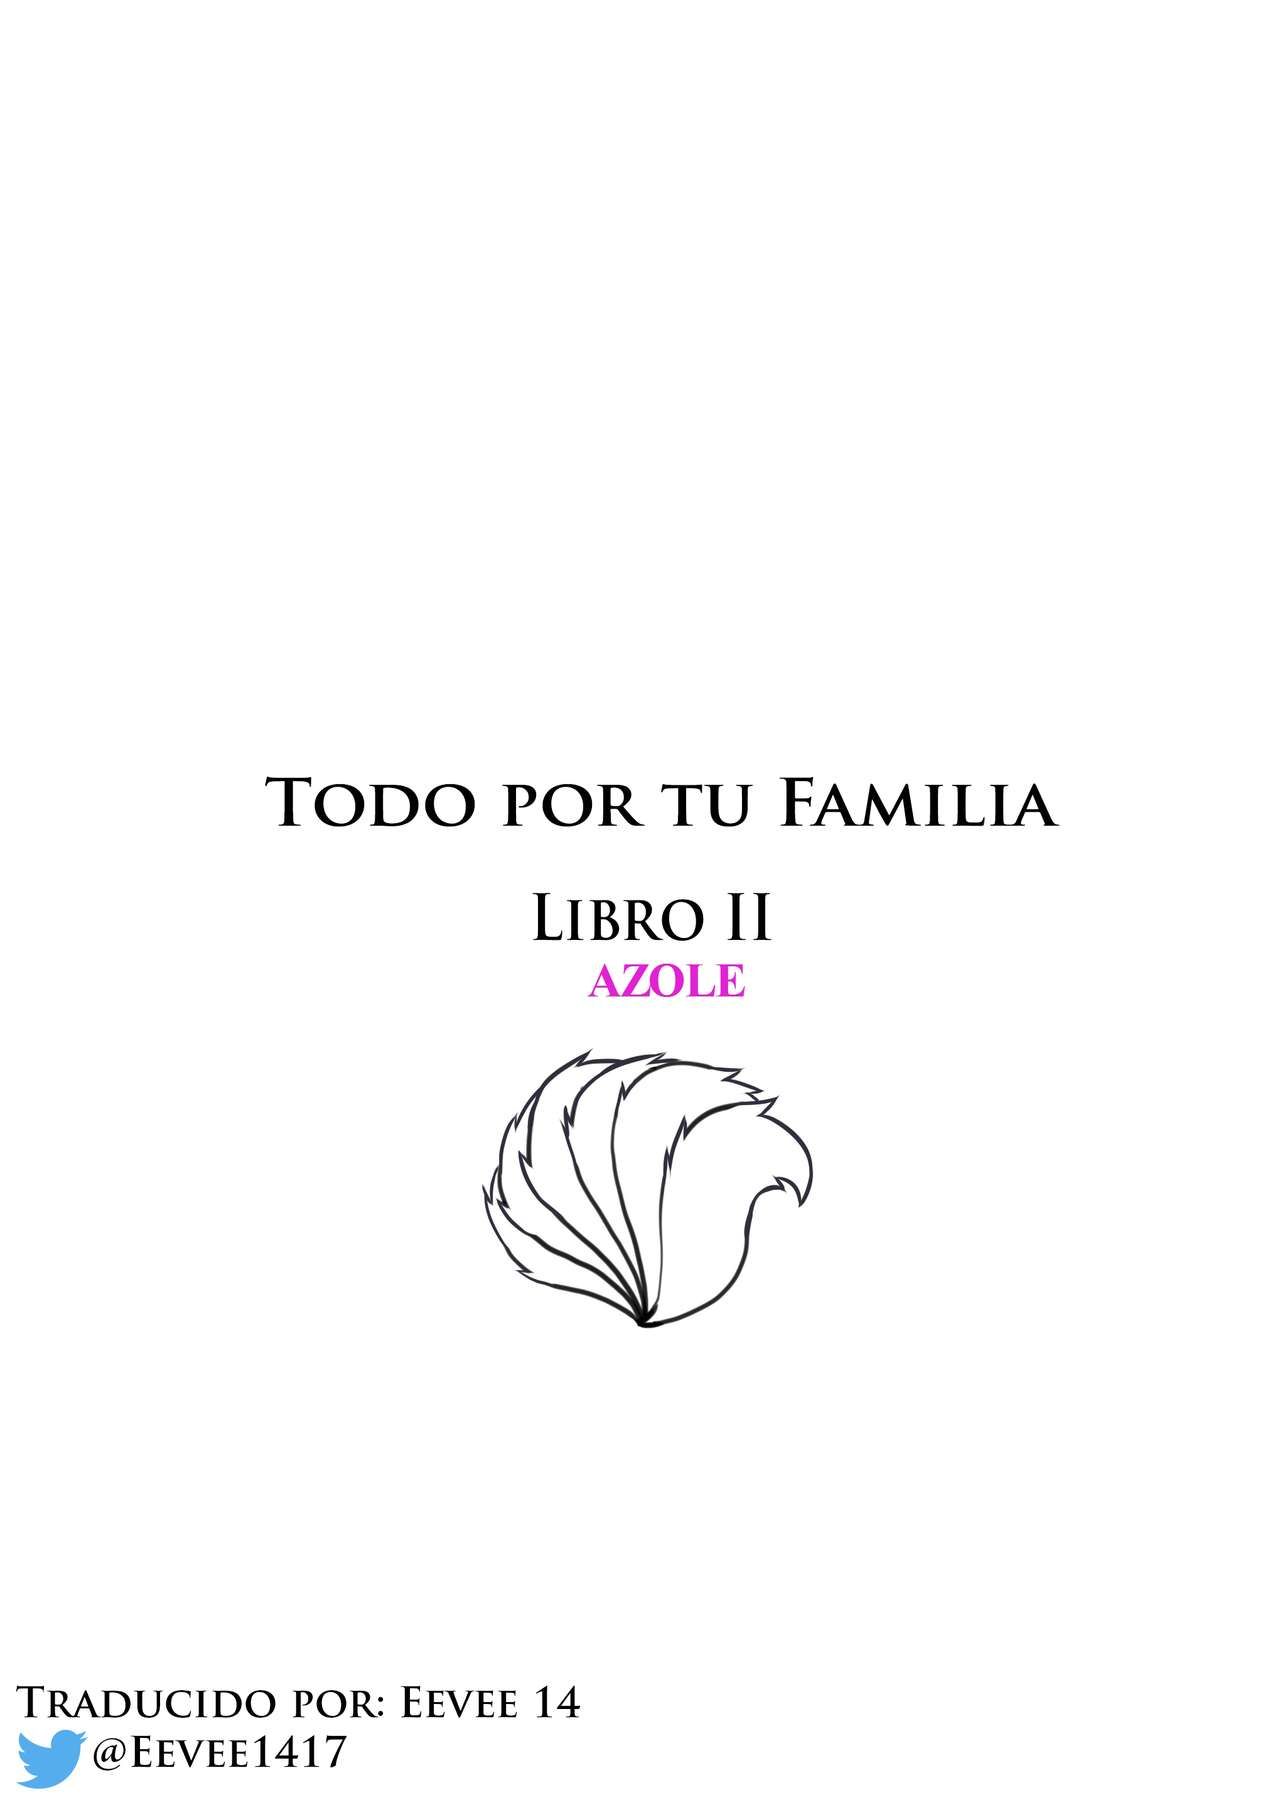 [Aogami] Todo por tu familia (Pokémon) Libro 2 Azole [Español] [Aogami] Anything For Your Family Book 2 Azole [Ongoing] 1